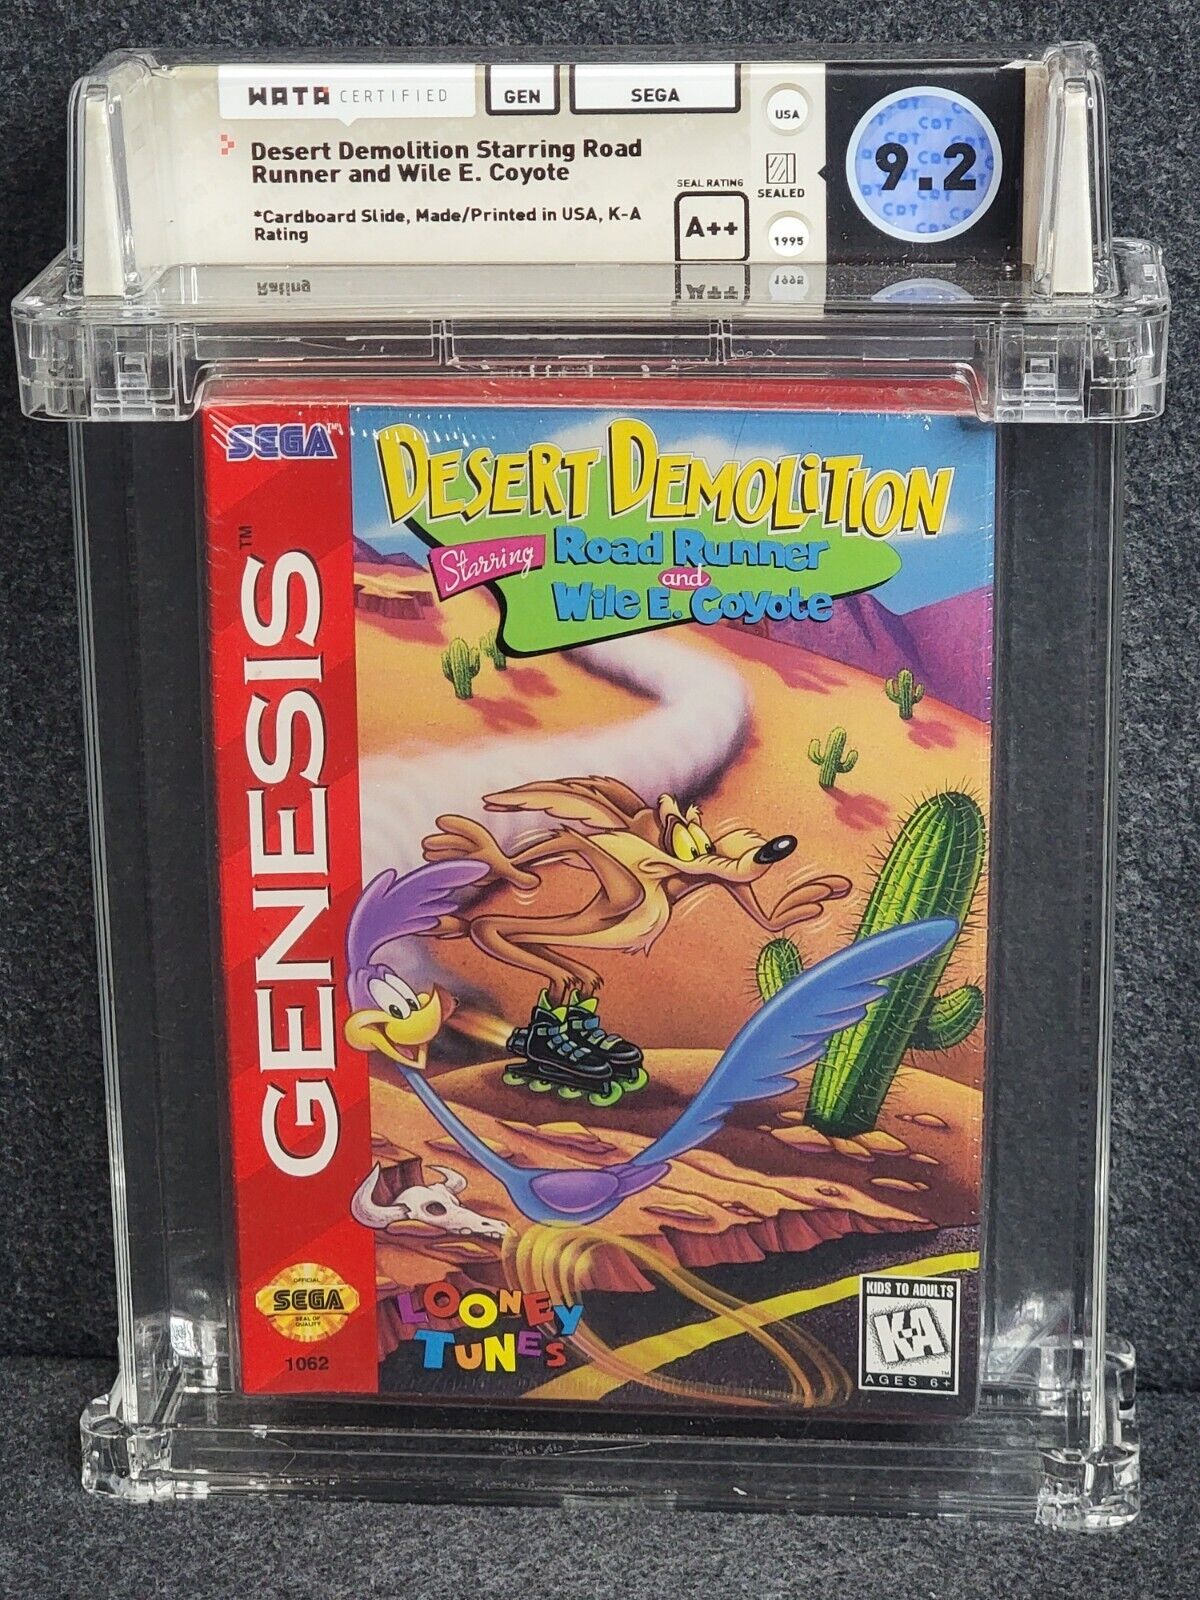 Sega Genesis DESERT DEMOLITION WATA 9.2 A++ New Sealed VGA Looney Road Runner